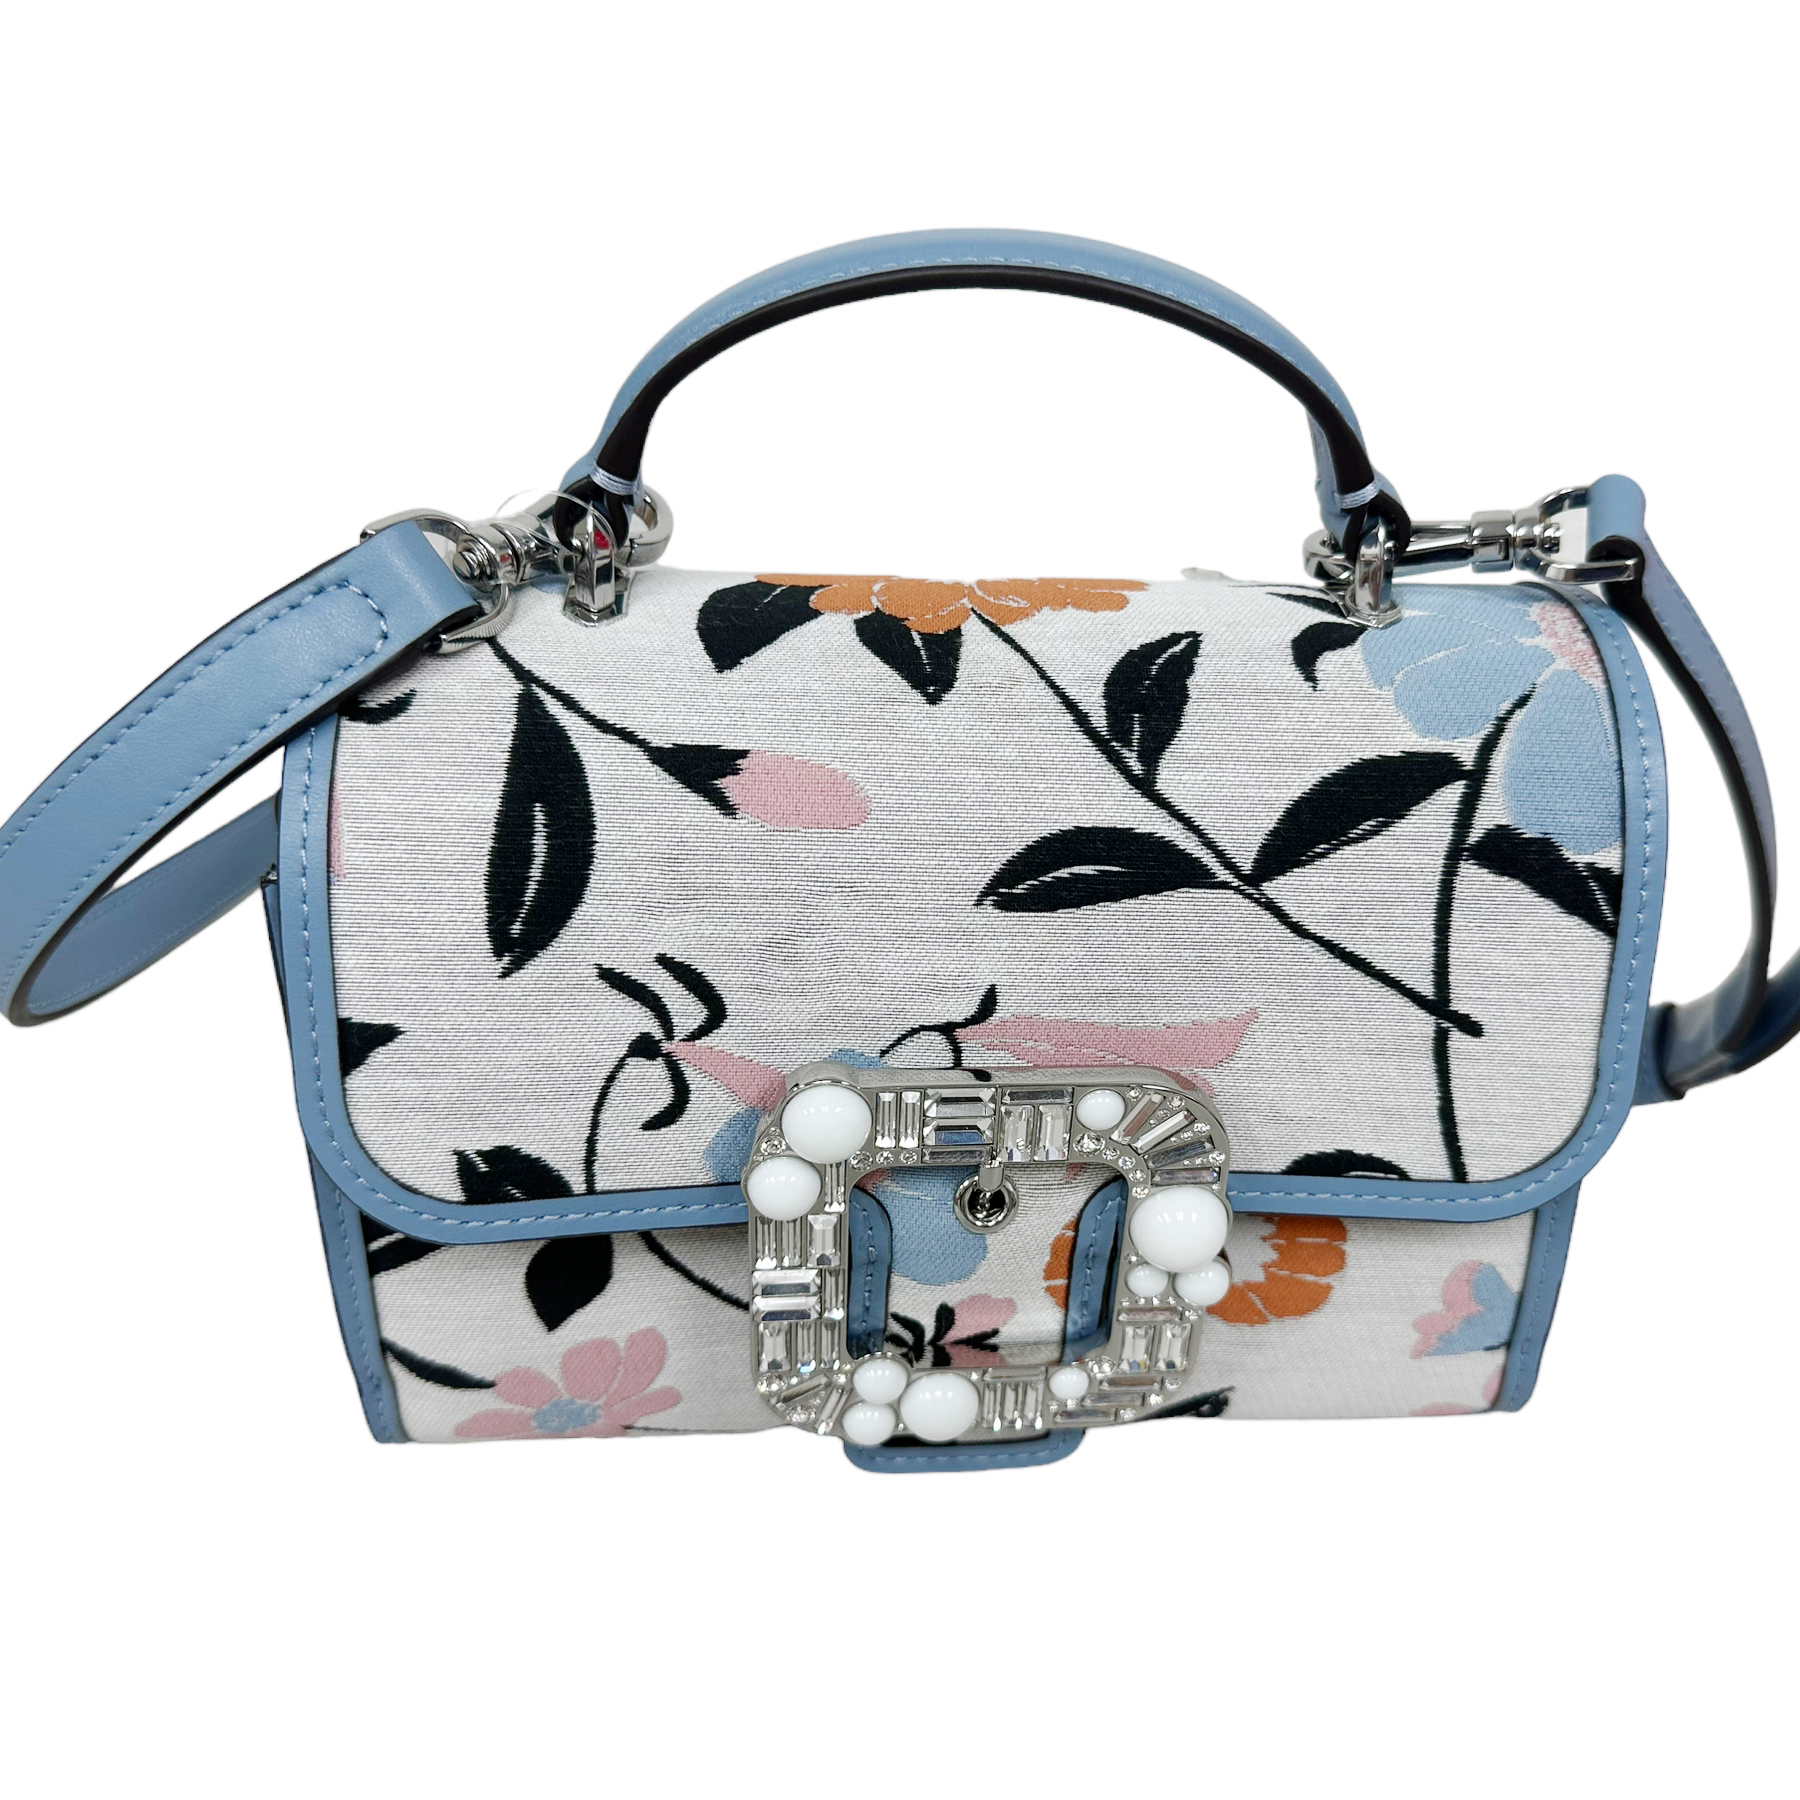 Kate Spade bag. lovitt buckled floral jacquard small top handle crossbody.  